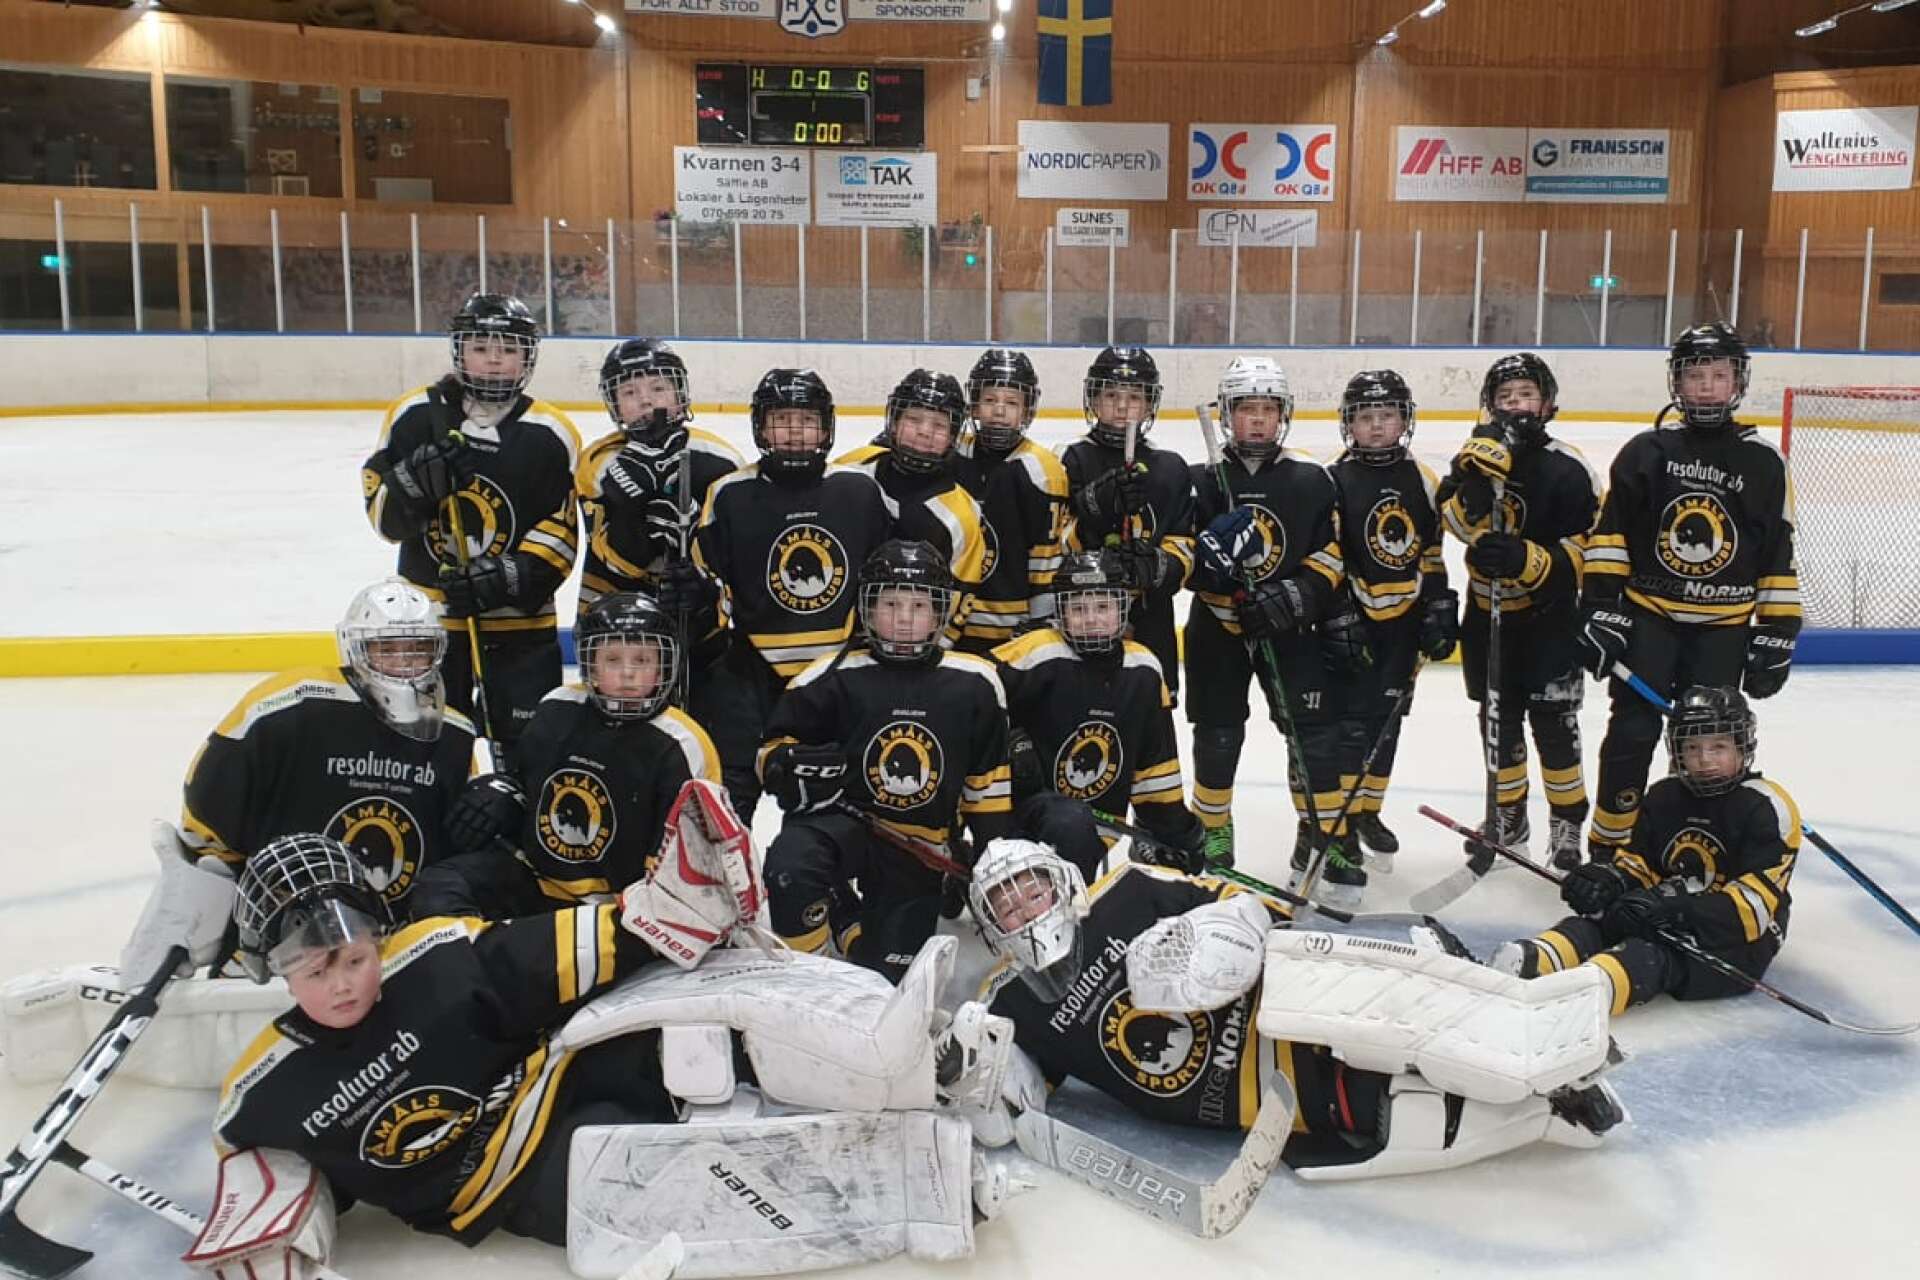 Åmåls Sportklubbs U11-lag spelade Nordic Youth Trophy i Somashallen i Säffle. 